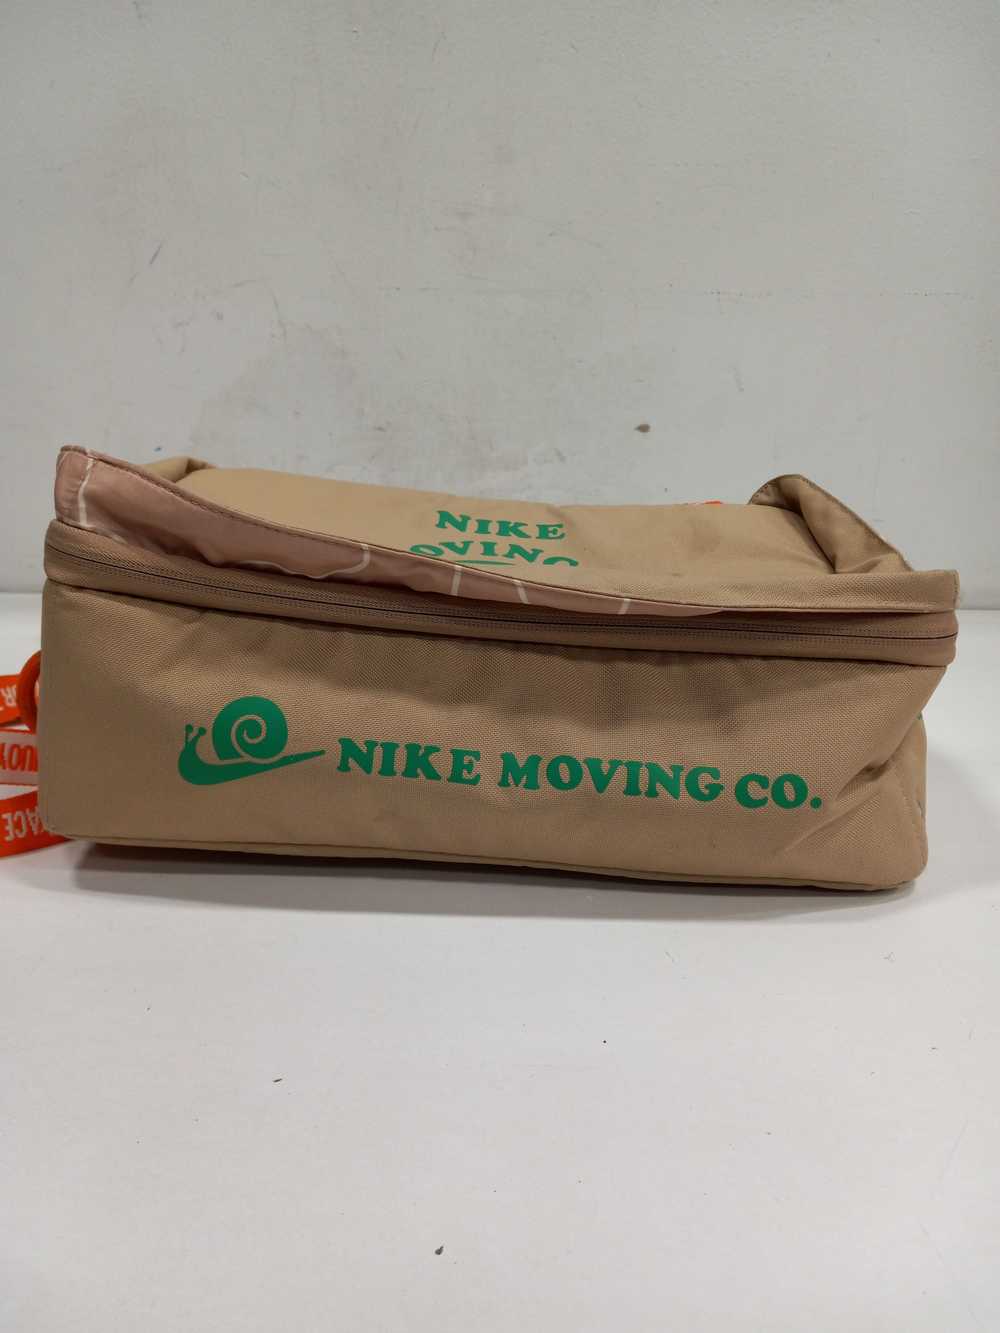 Nike 'Slow and Steady Moving Company' Shoe Storag… - image 3